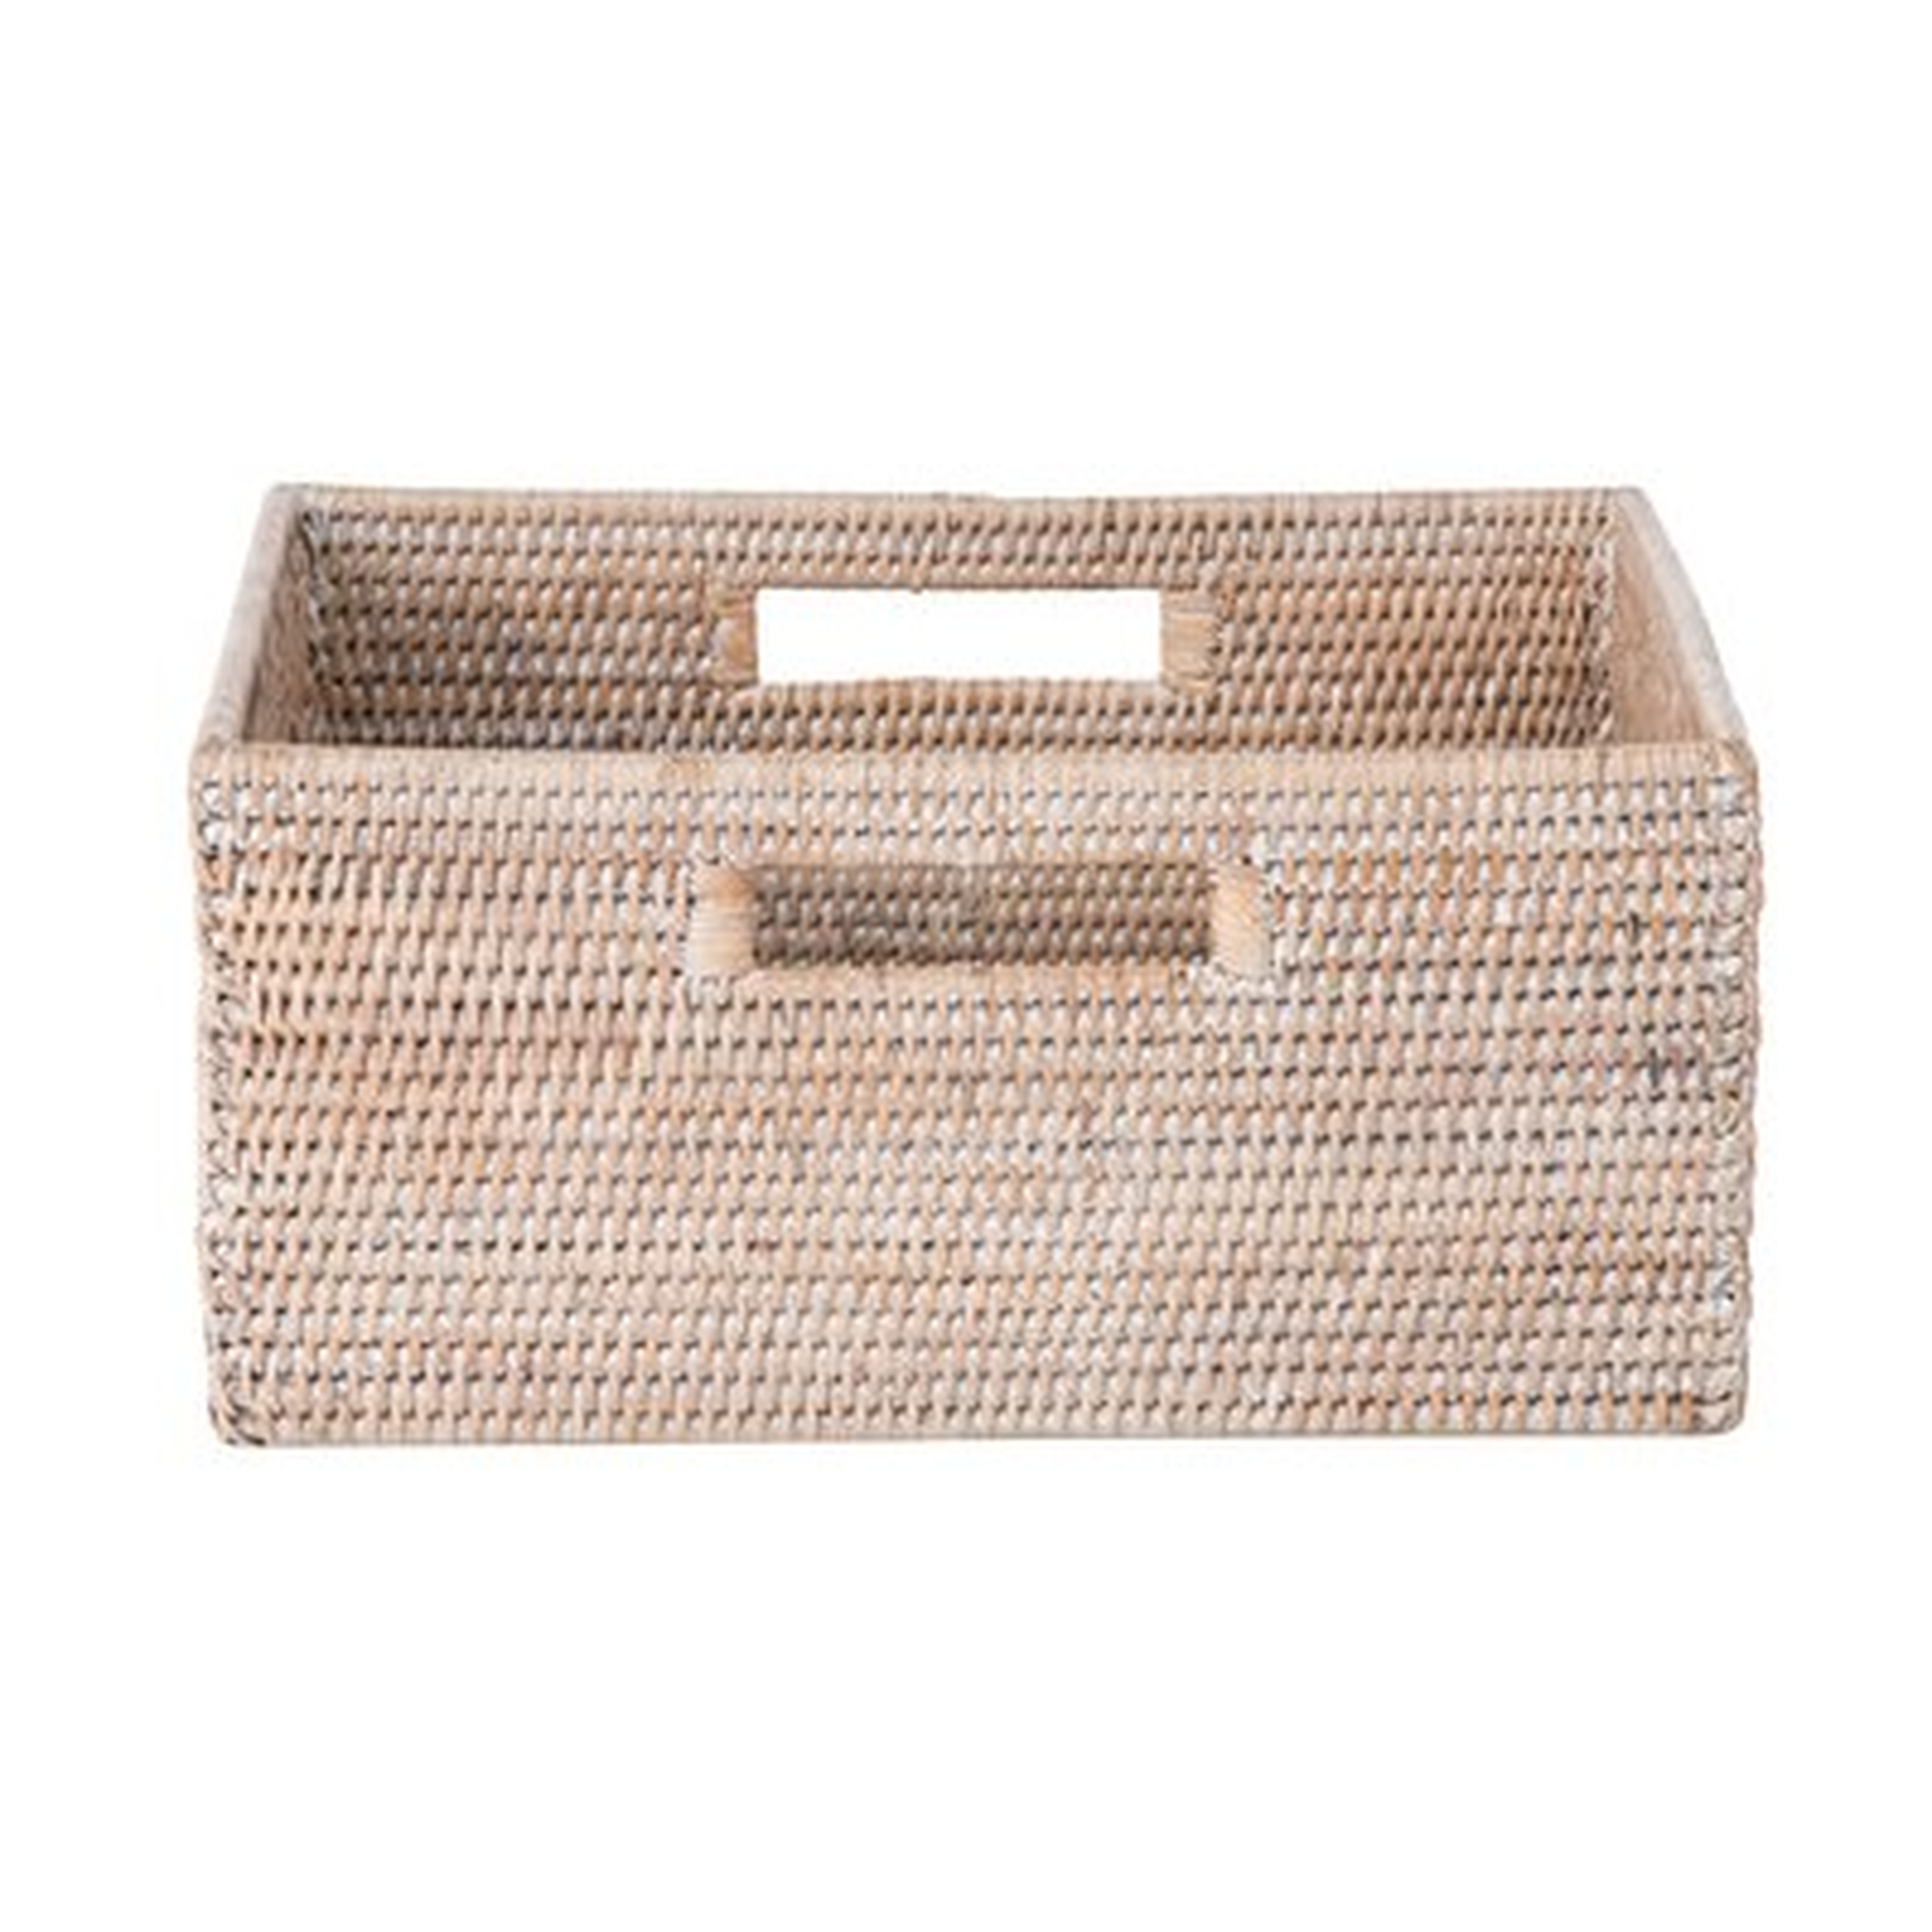 Coiled Storage Rattan Basket - Wayfair